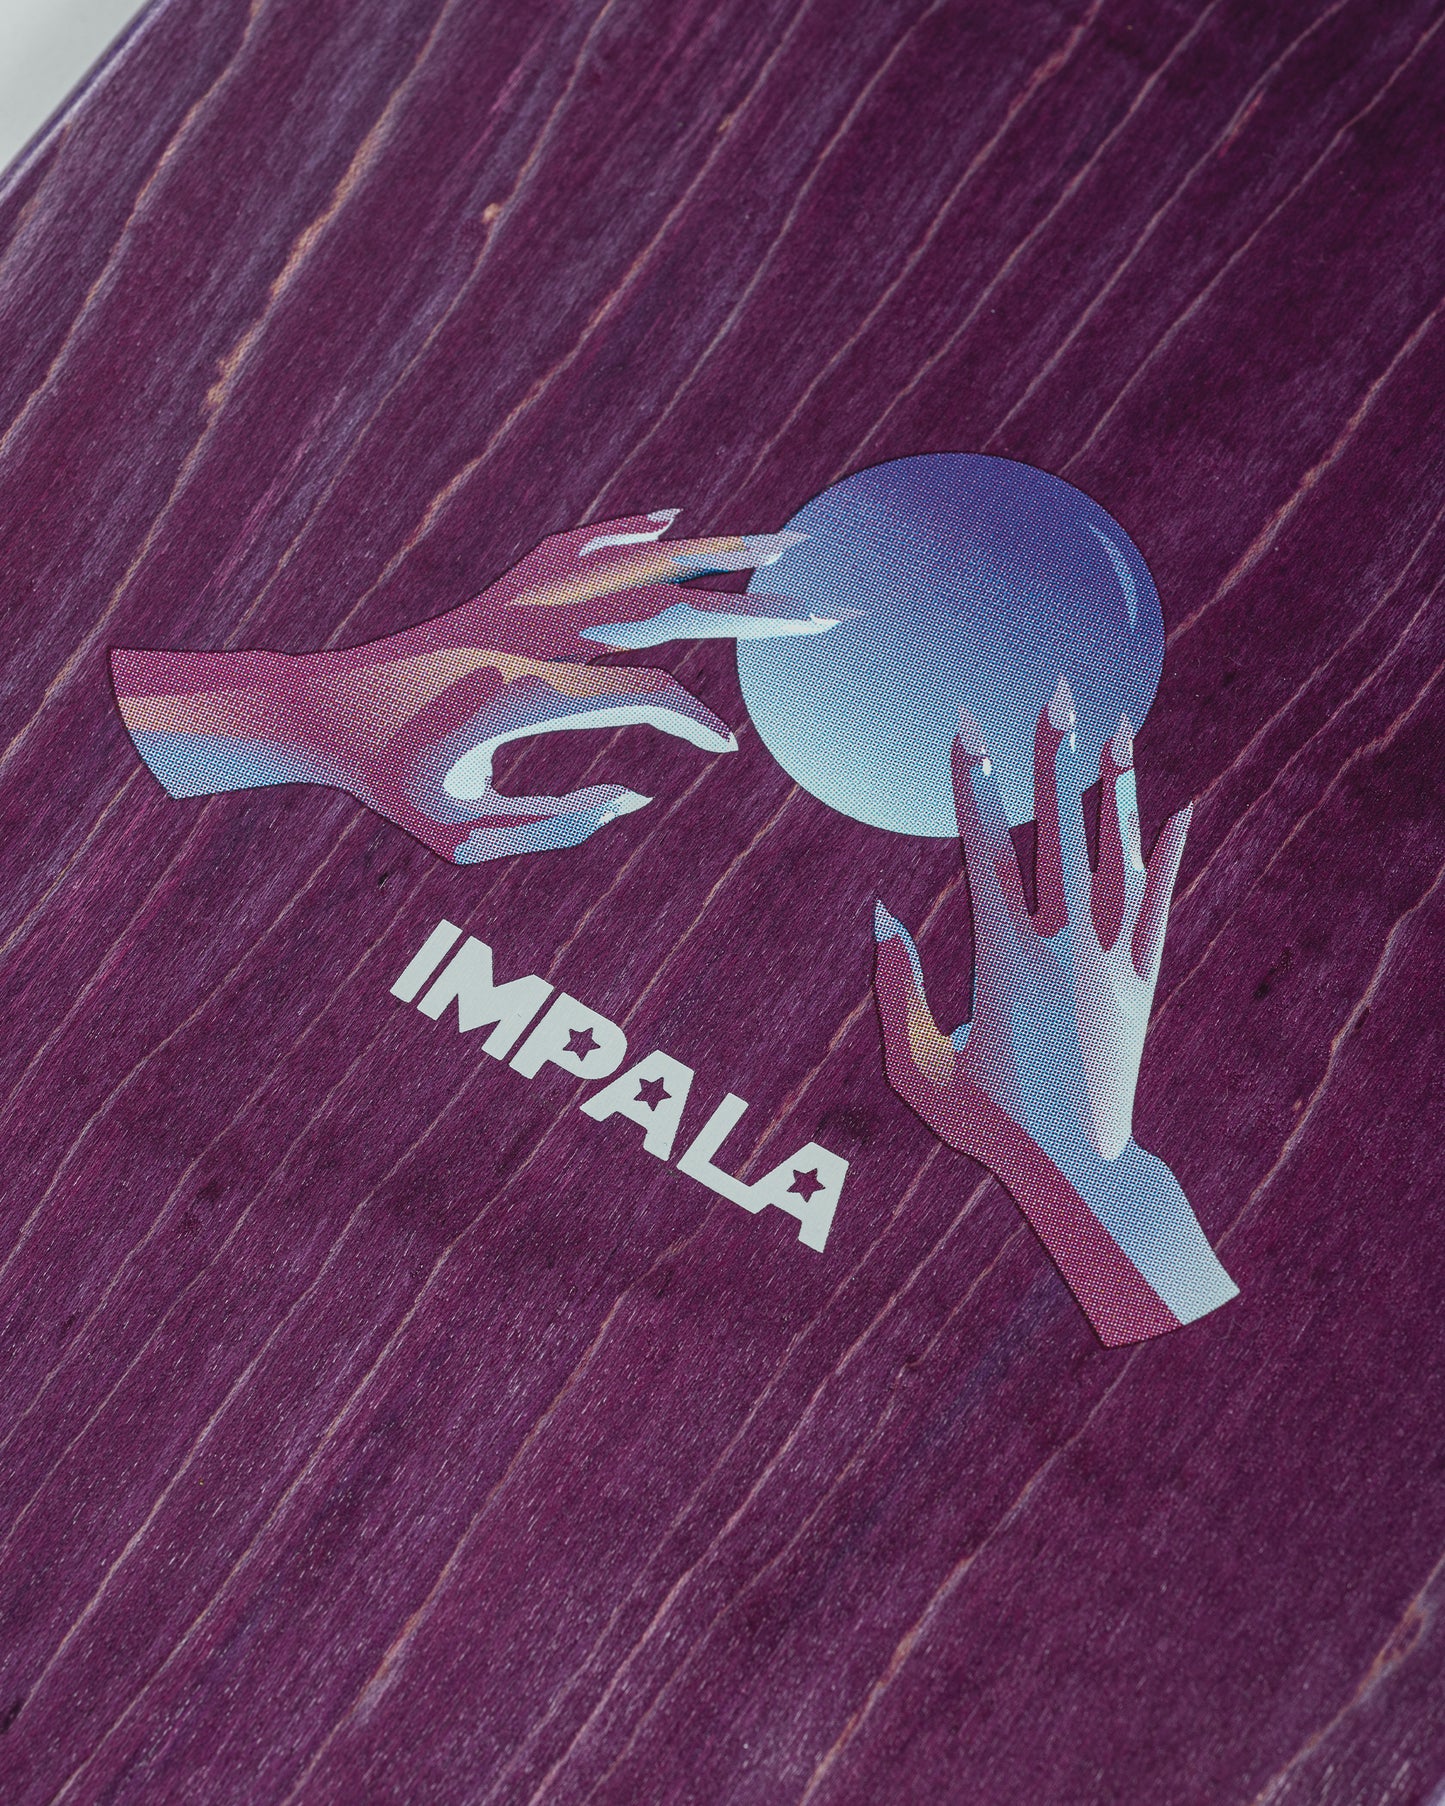 Impala Mystic Deck 8.0" - Impala Rollerskates